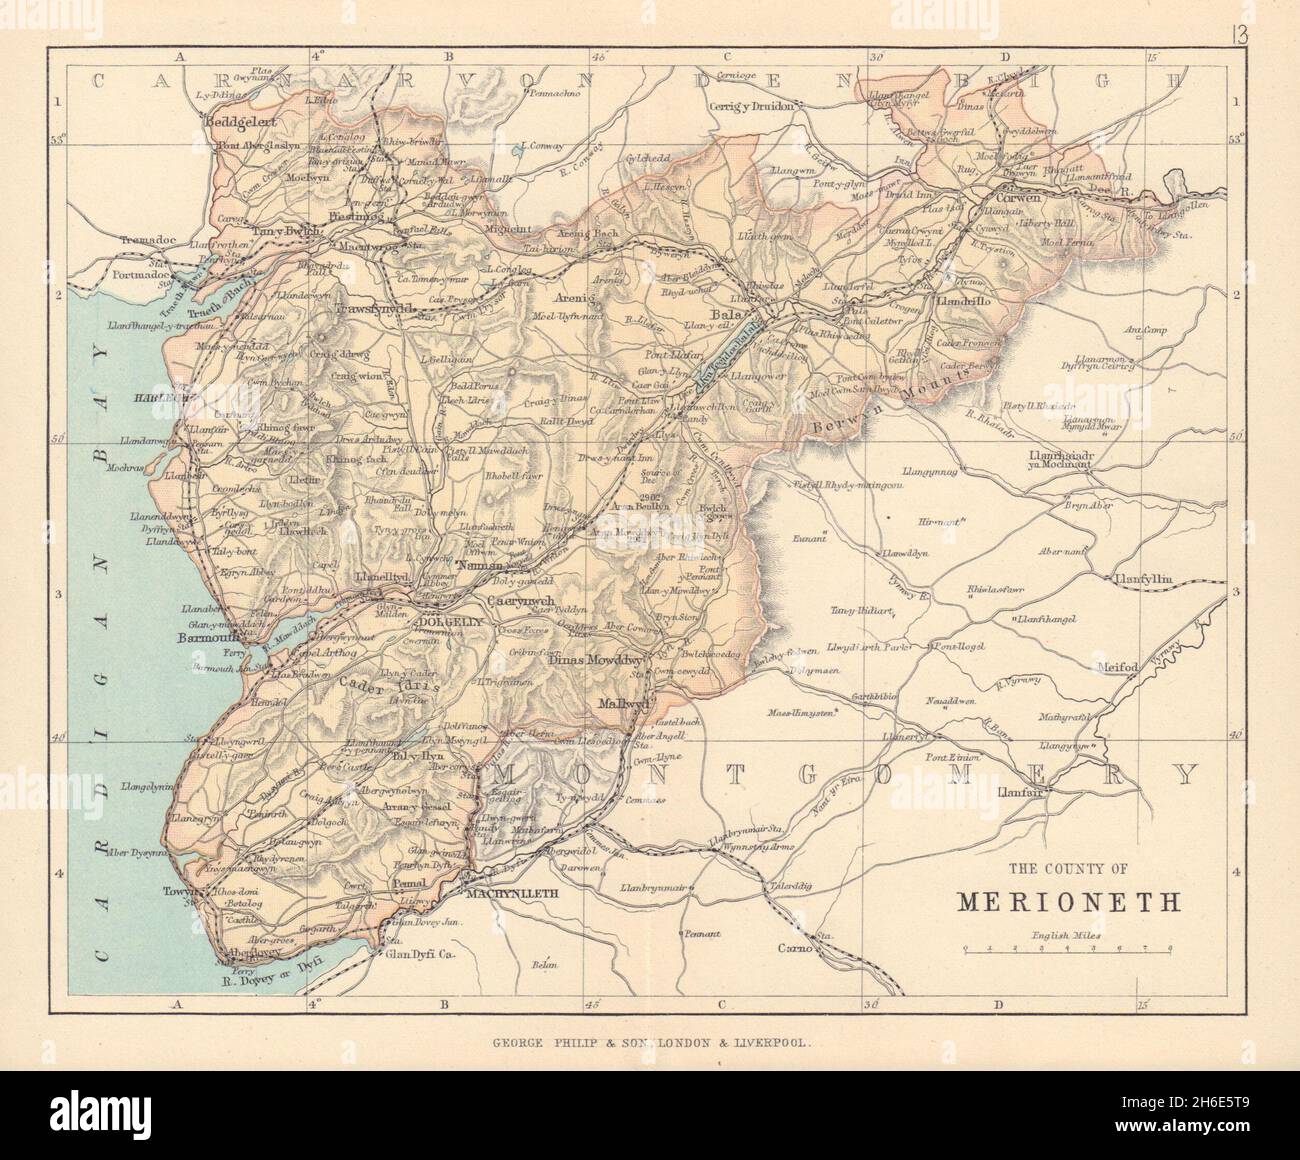 MERIONETHSHIRE 'County of Merioneth' Barmouth Tywyn Wales BARTHOLOMEW 1890 map Stock Photo